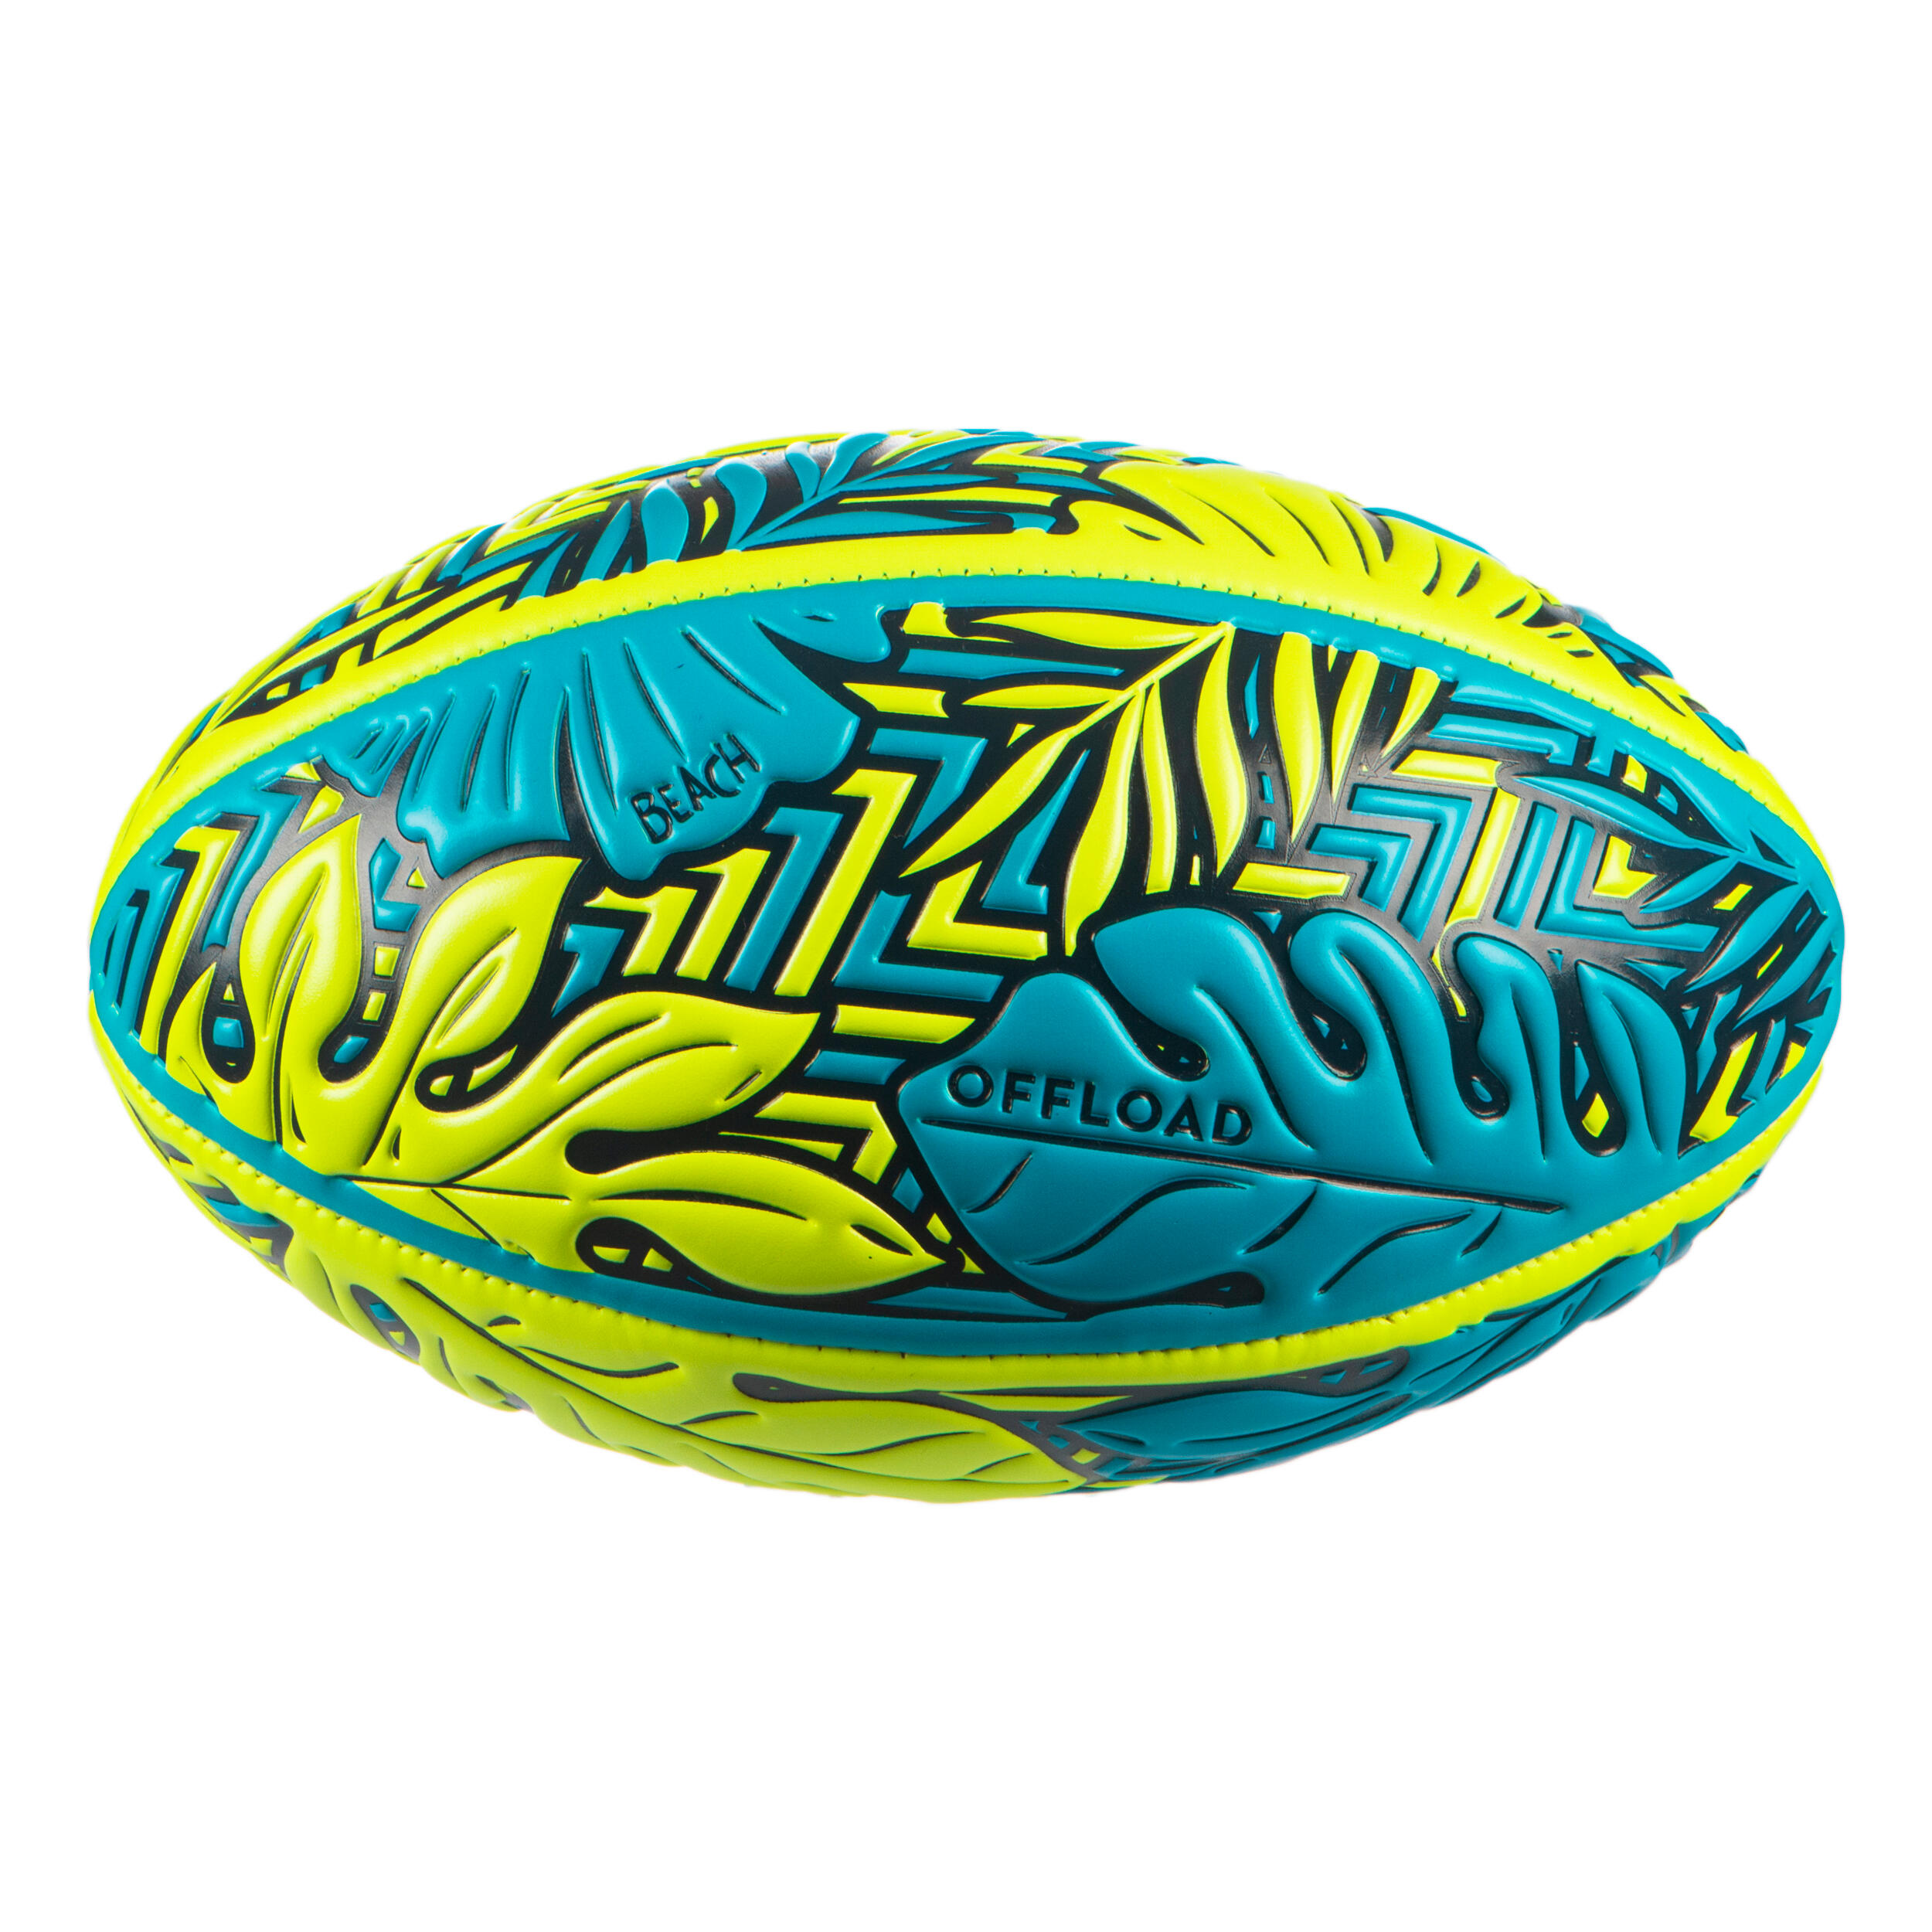 OFFLOAD Beach Rugby Ball R100 Midi Maori Size 1 - Blue/Yellow